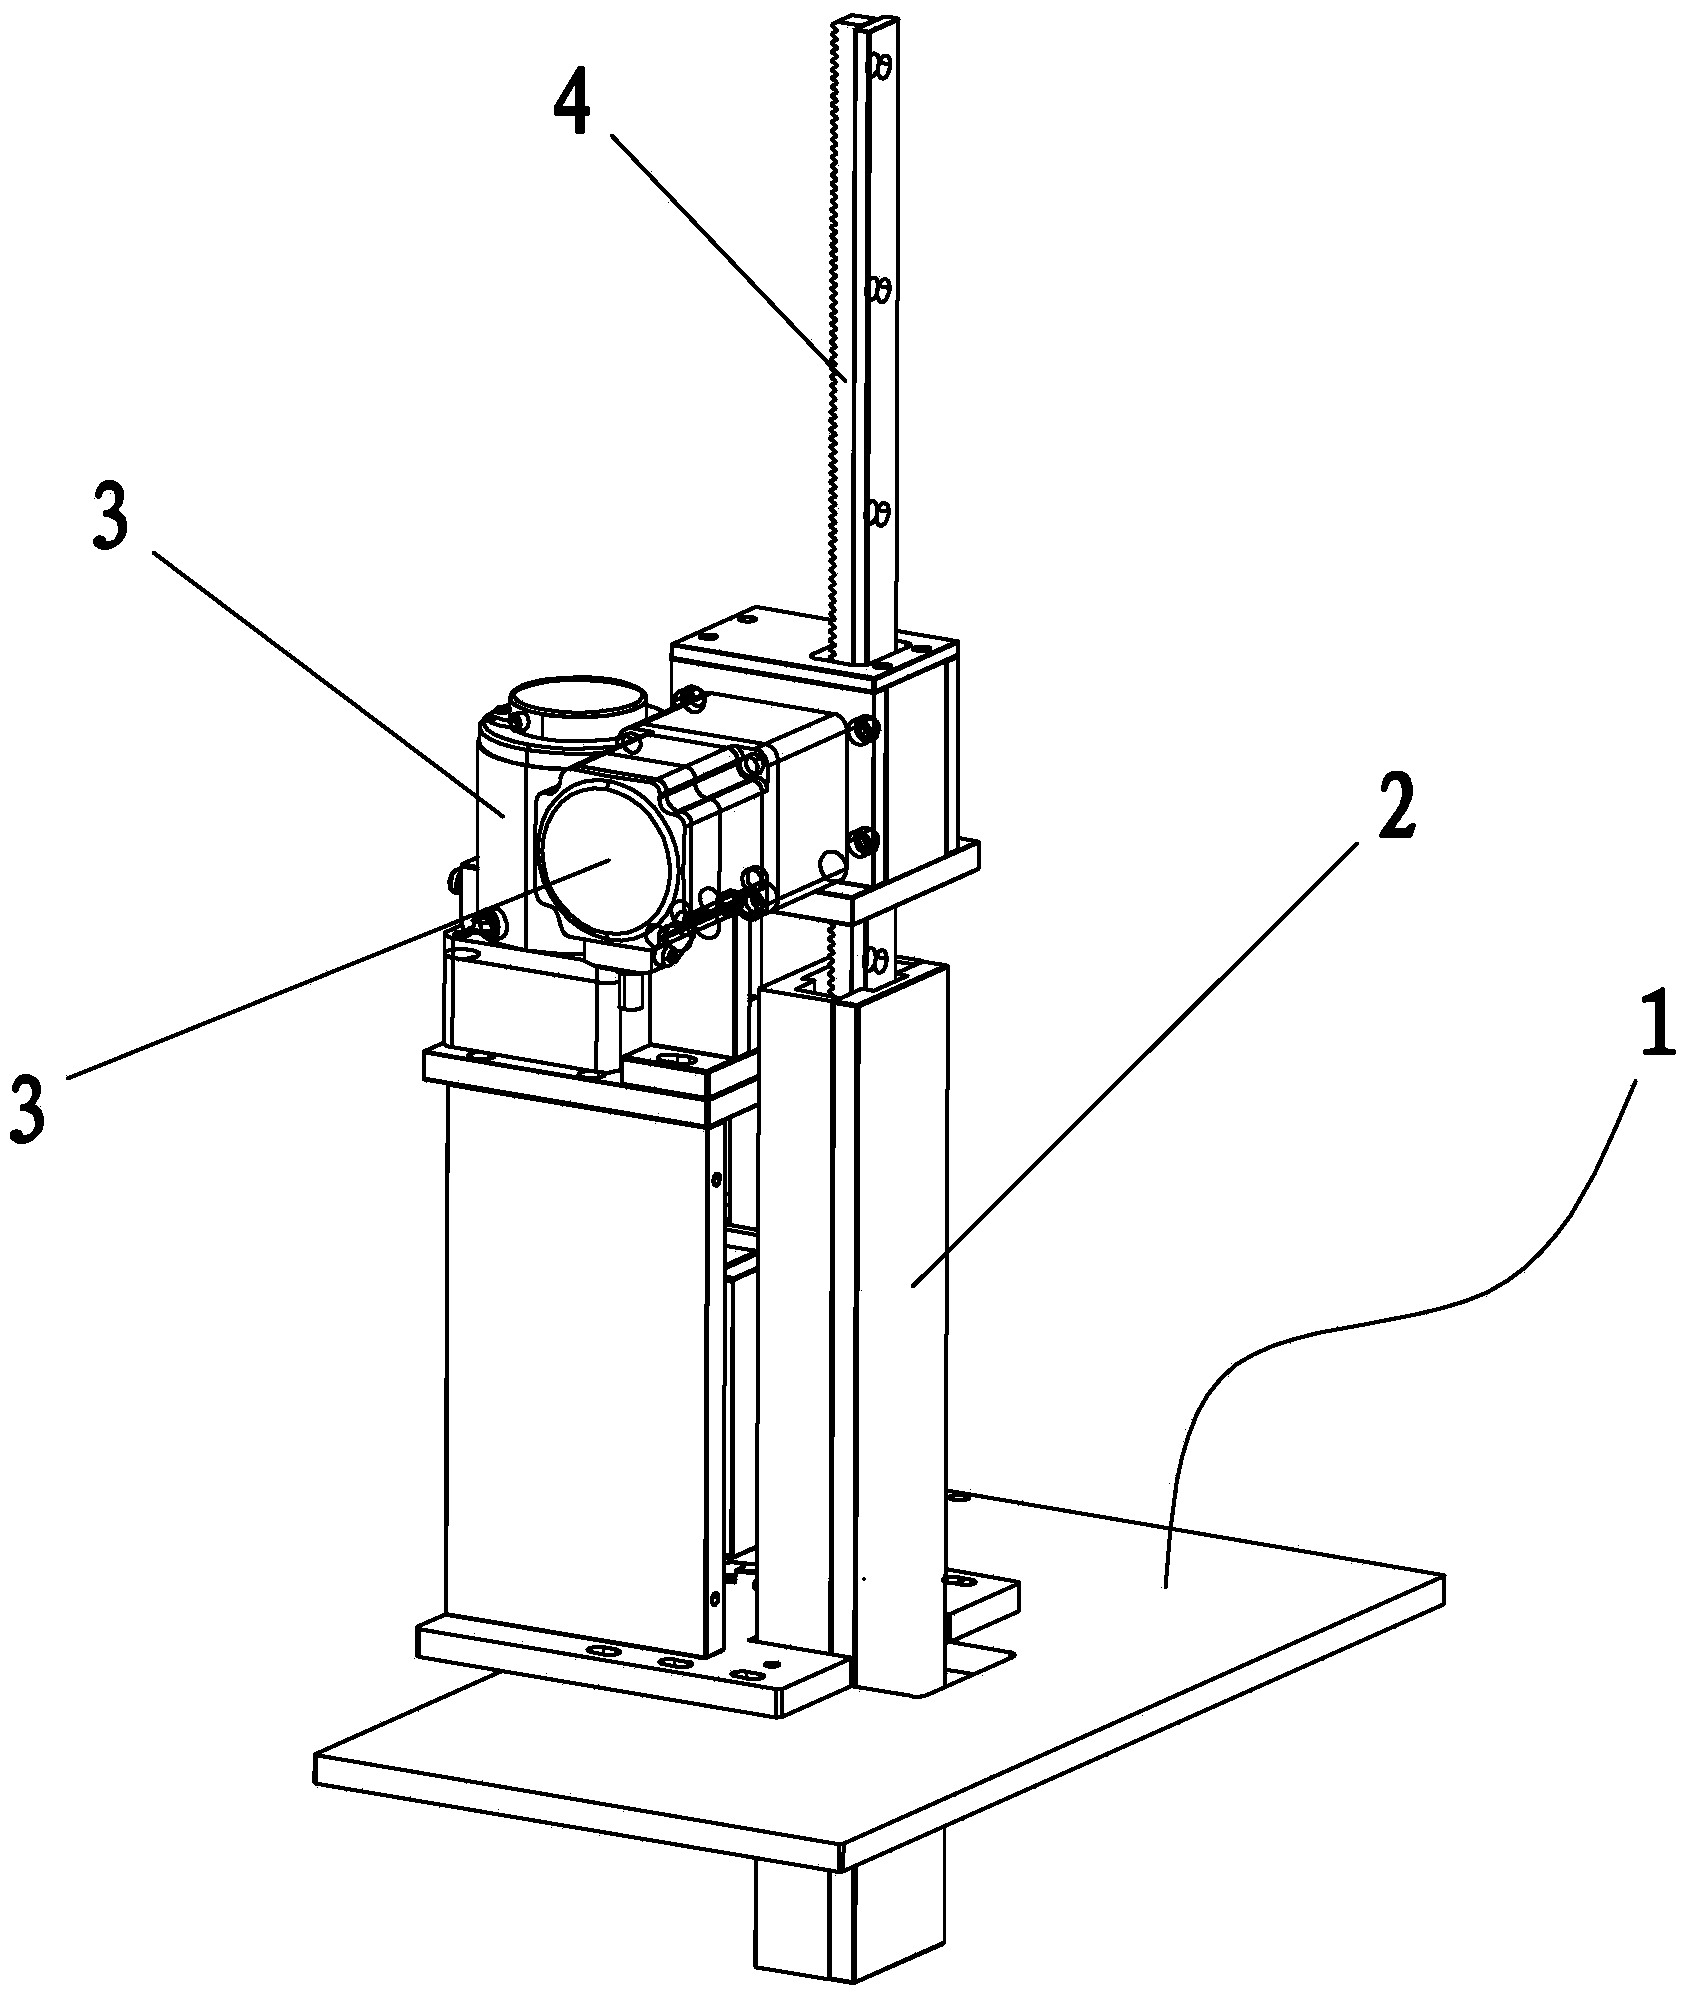 Wax conveying mechanism for polishing machine